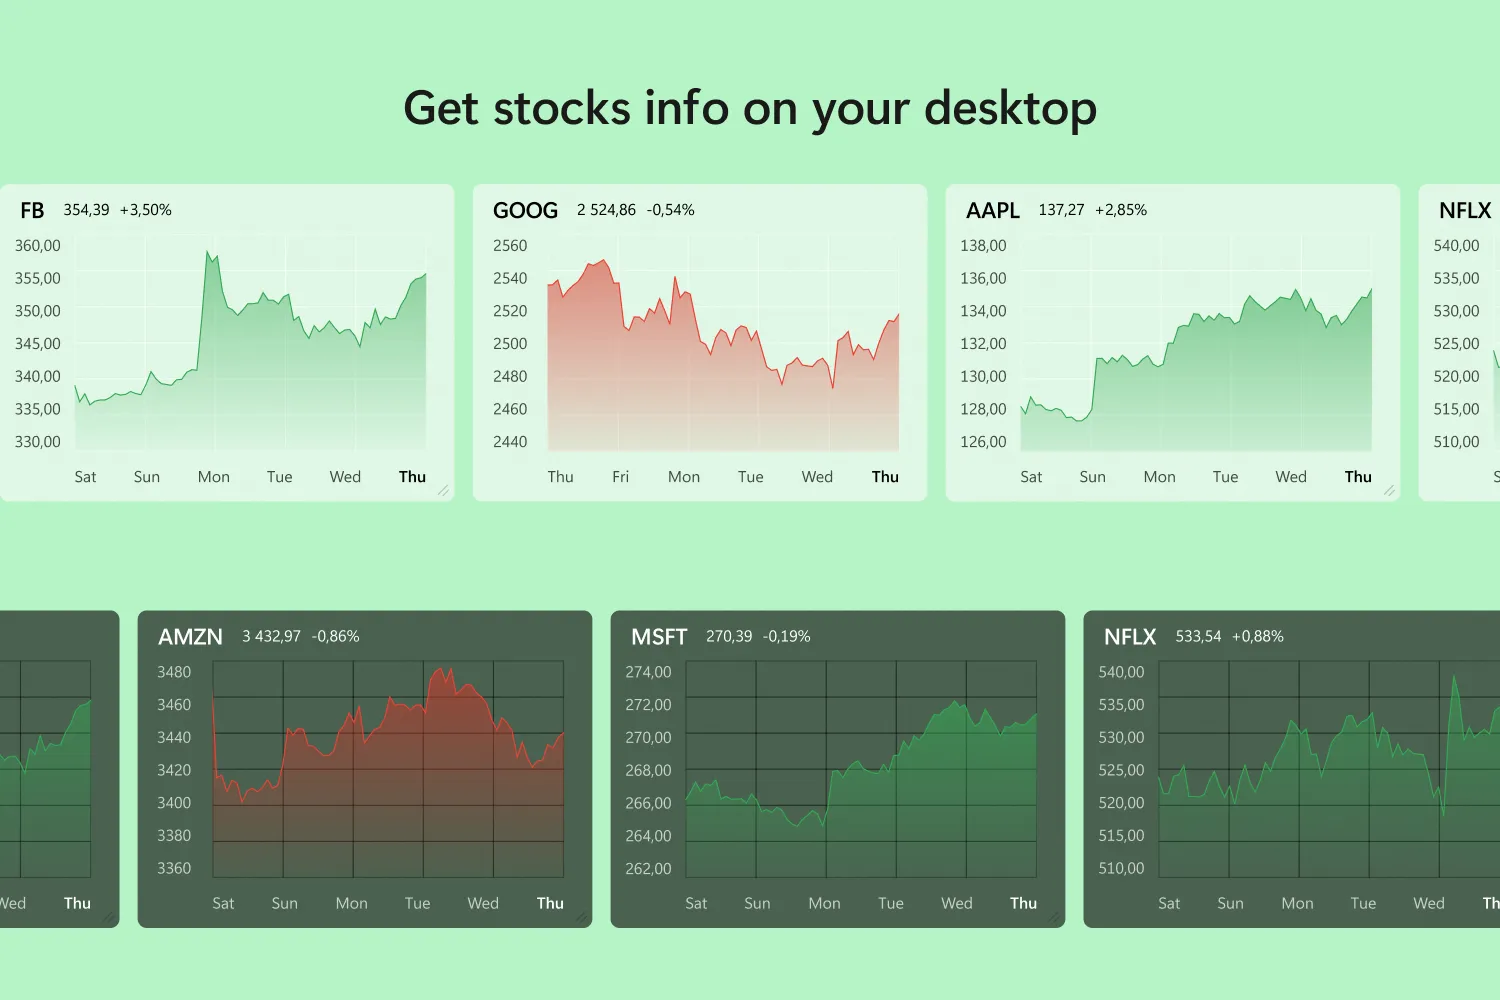 Get stocks info on your desktop